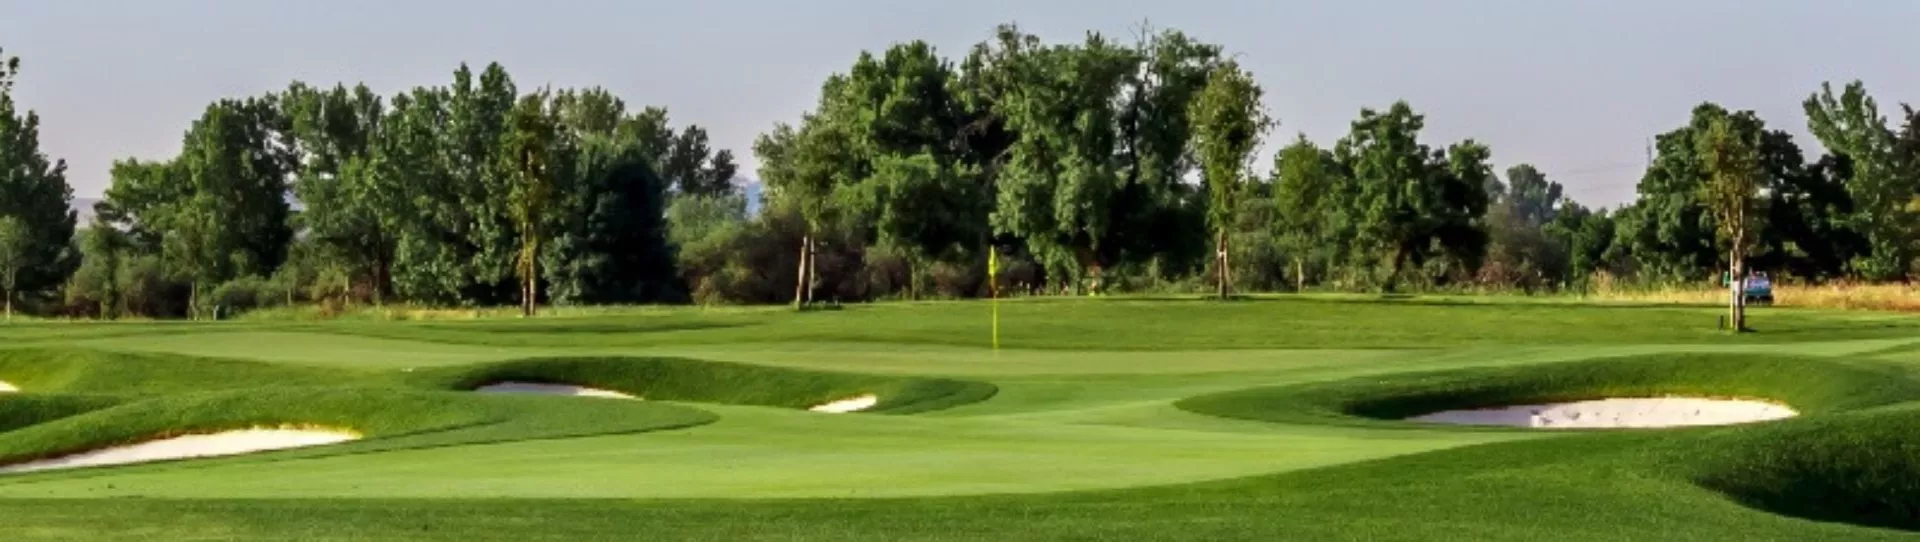 Spain golf courses - La Junquera Golf Course - Photo 1